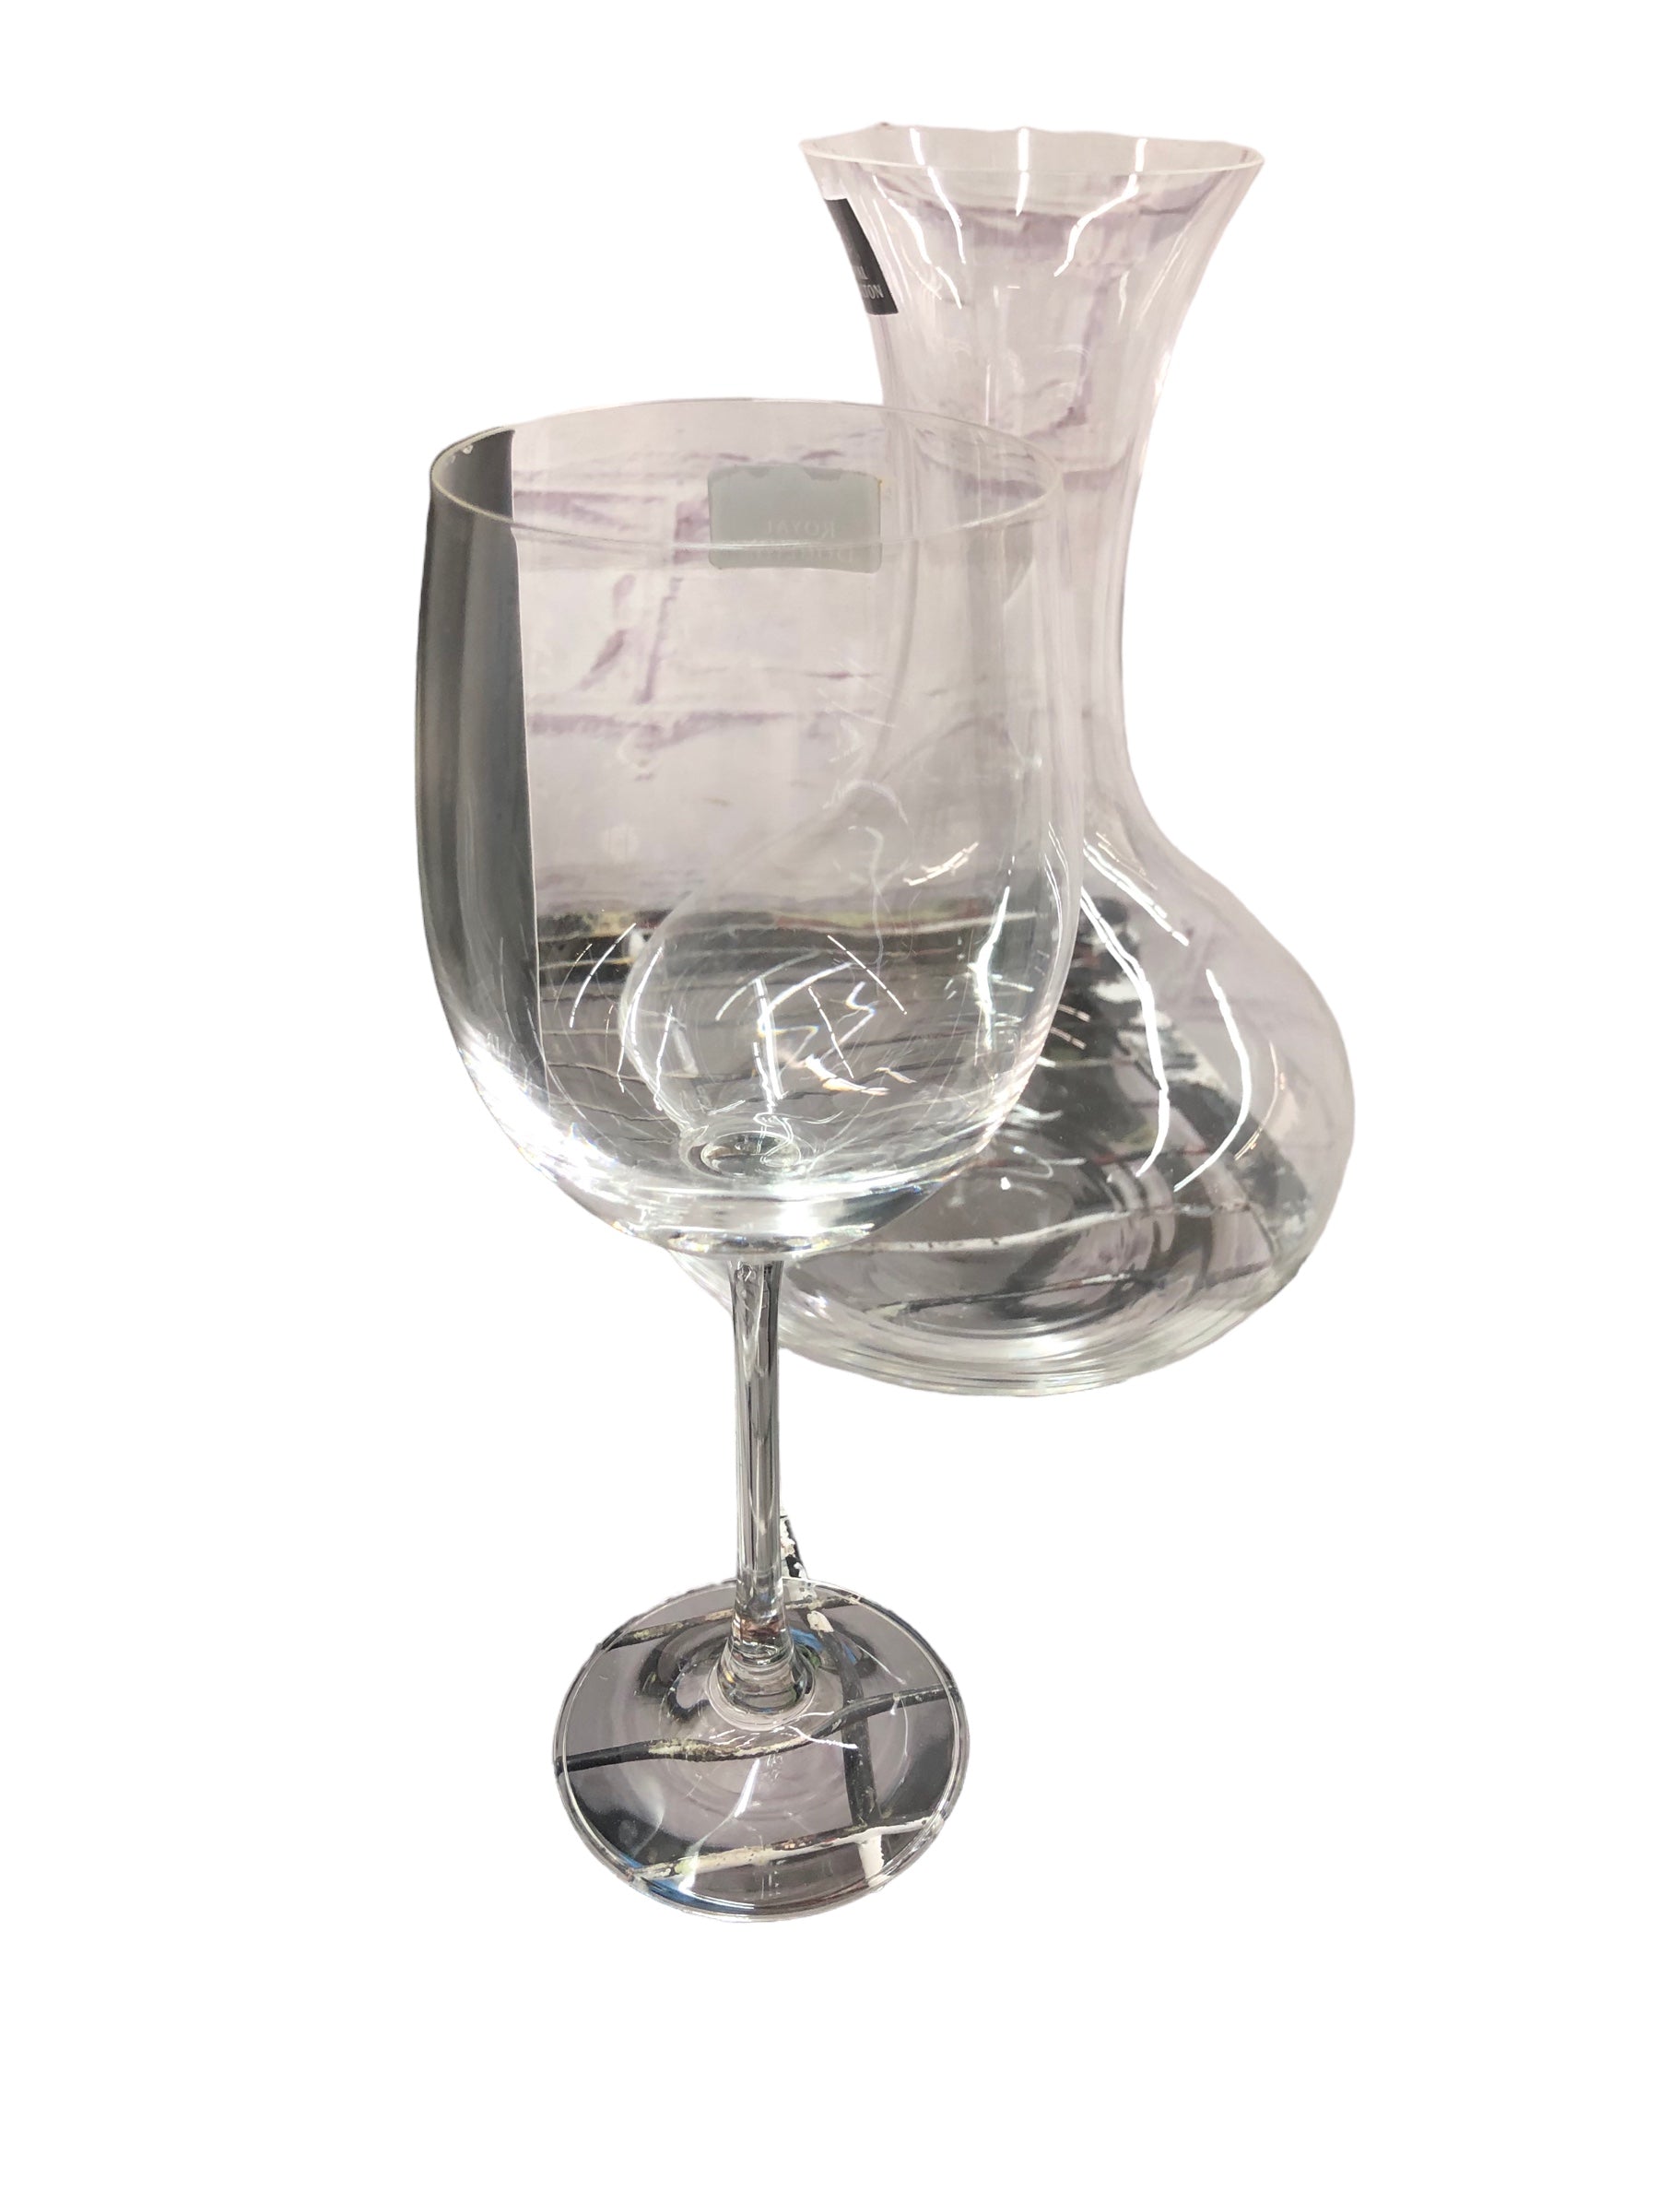 Royal Doulton Carafe & Wine Glasses